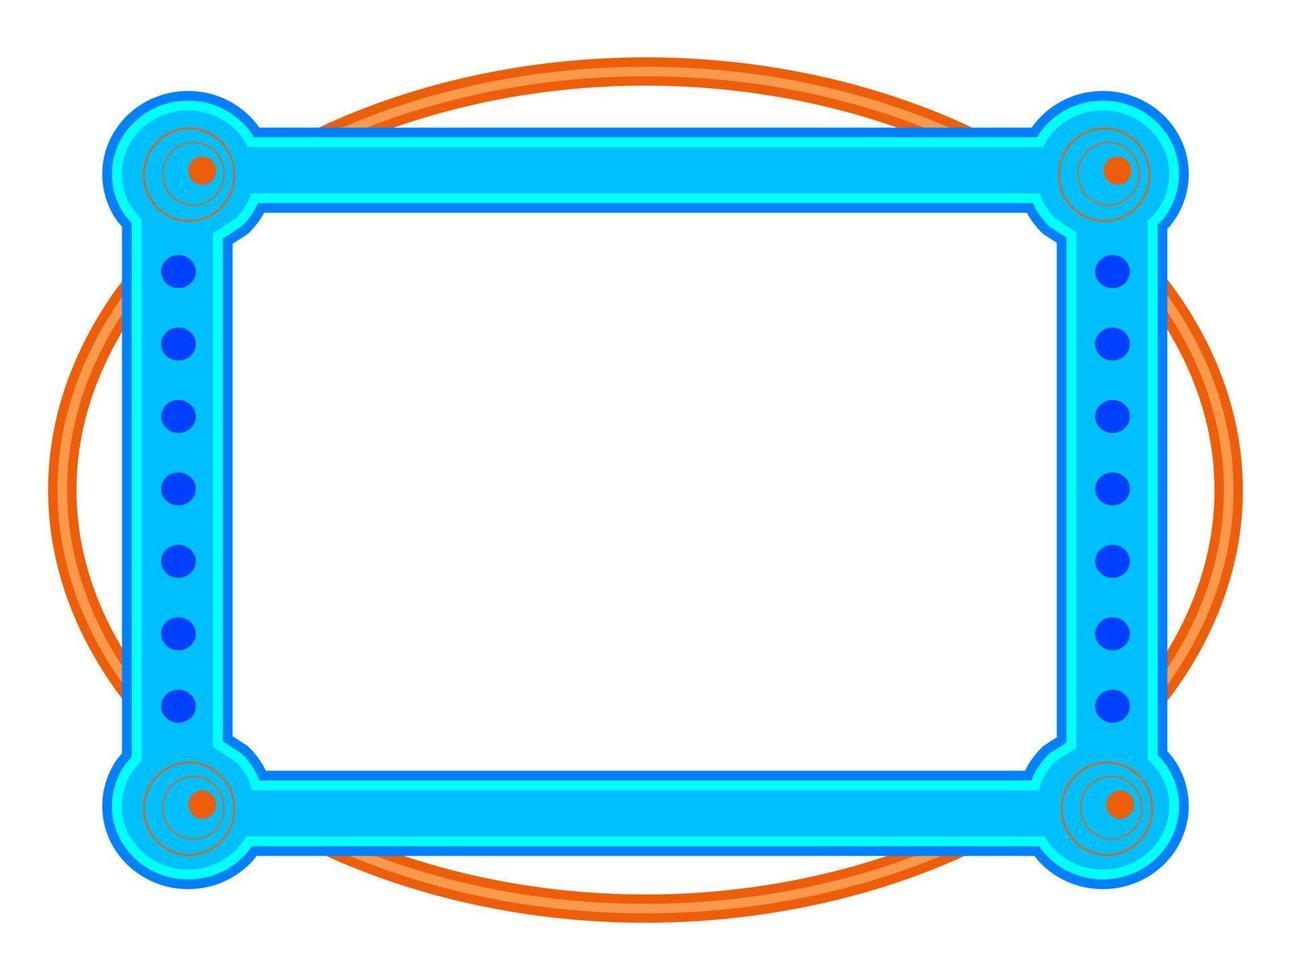 Basic Blue Page Frame Border vector